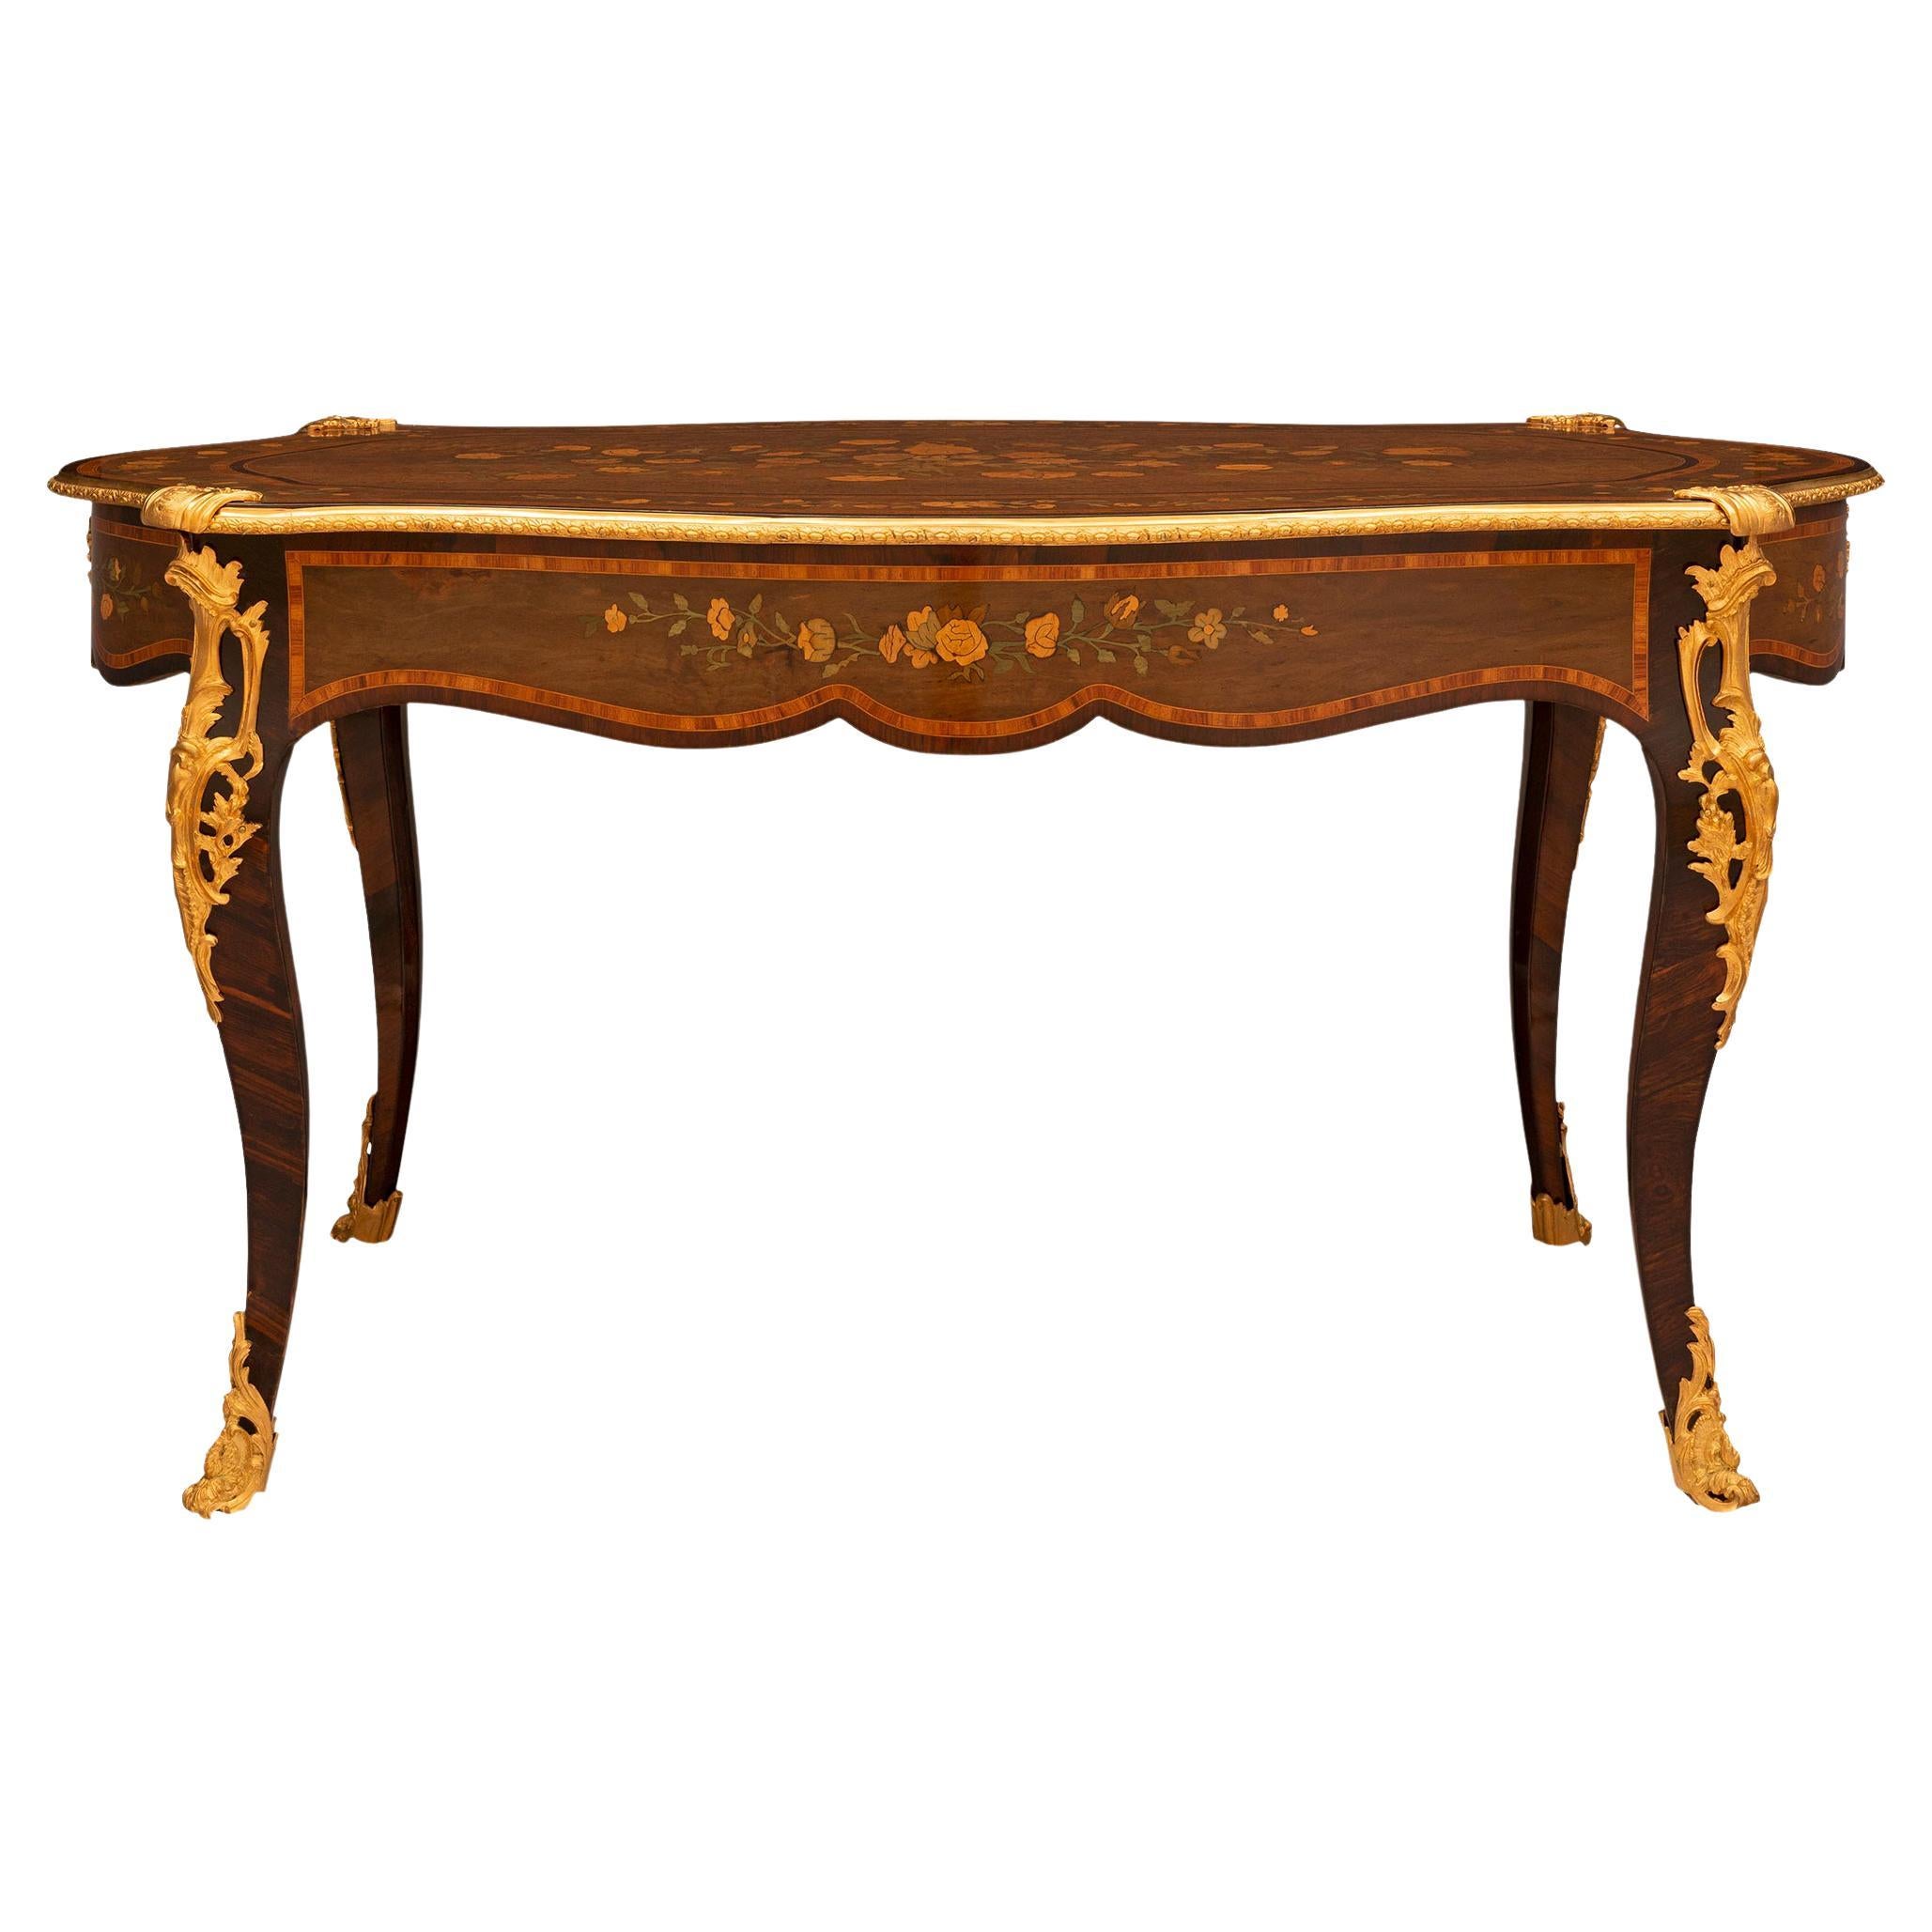 Table centrale française du XIXe siècle de style Louis XV d'époque Napoléon III en vente